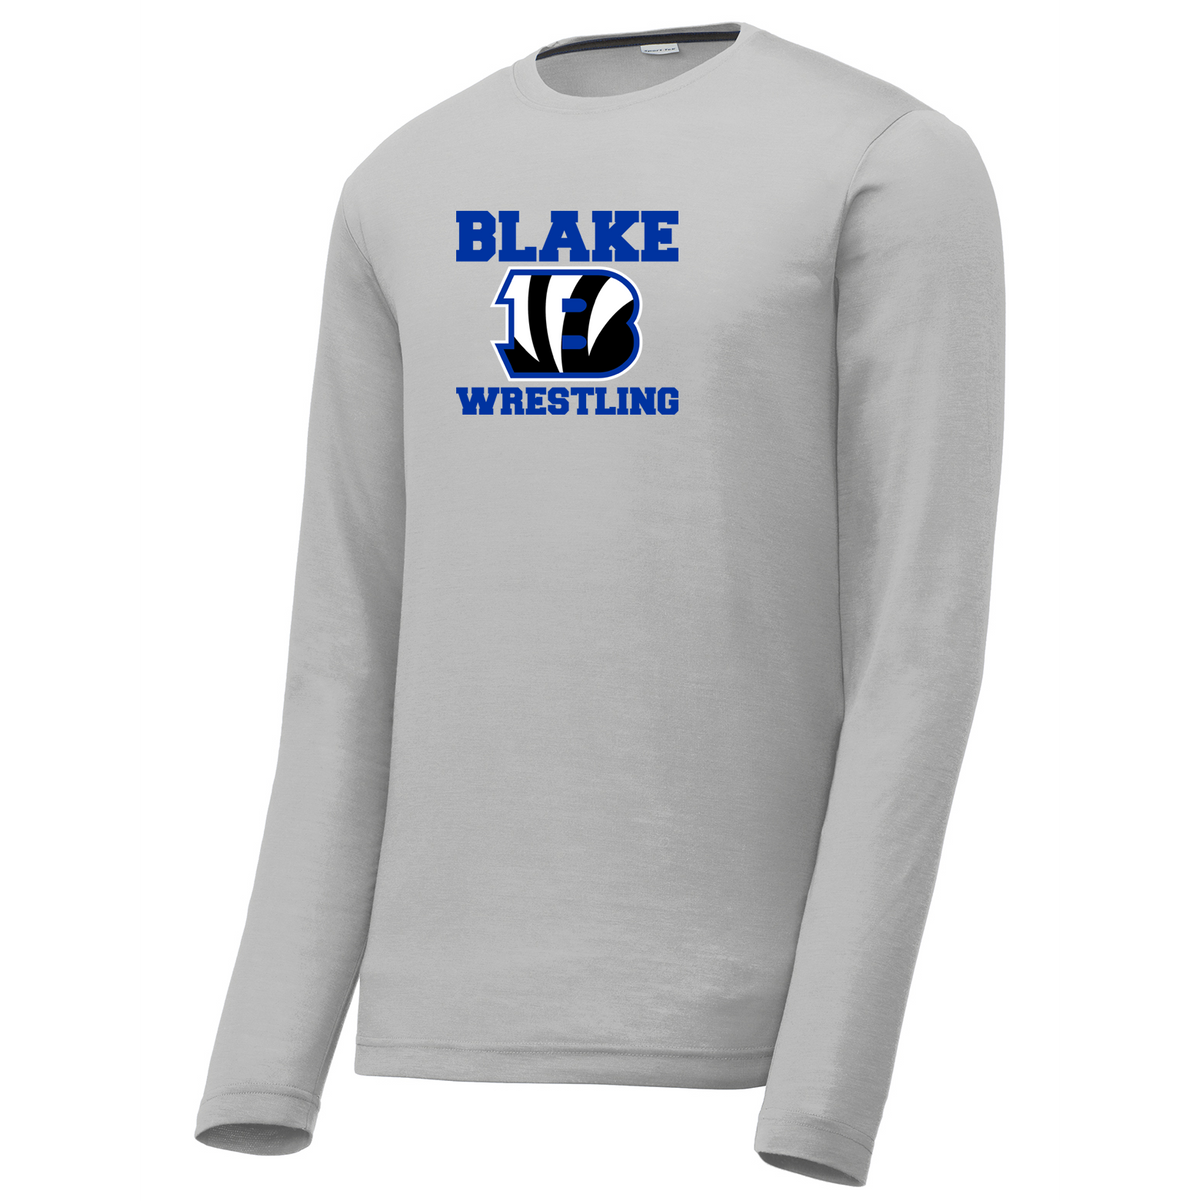 Blake Wrestling Long Sleeve CottonTouch Performance Shirt